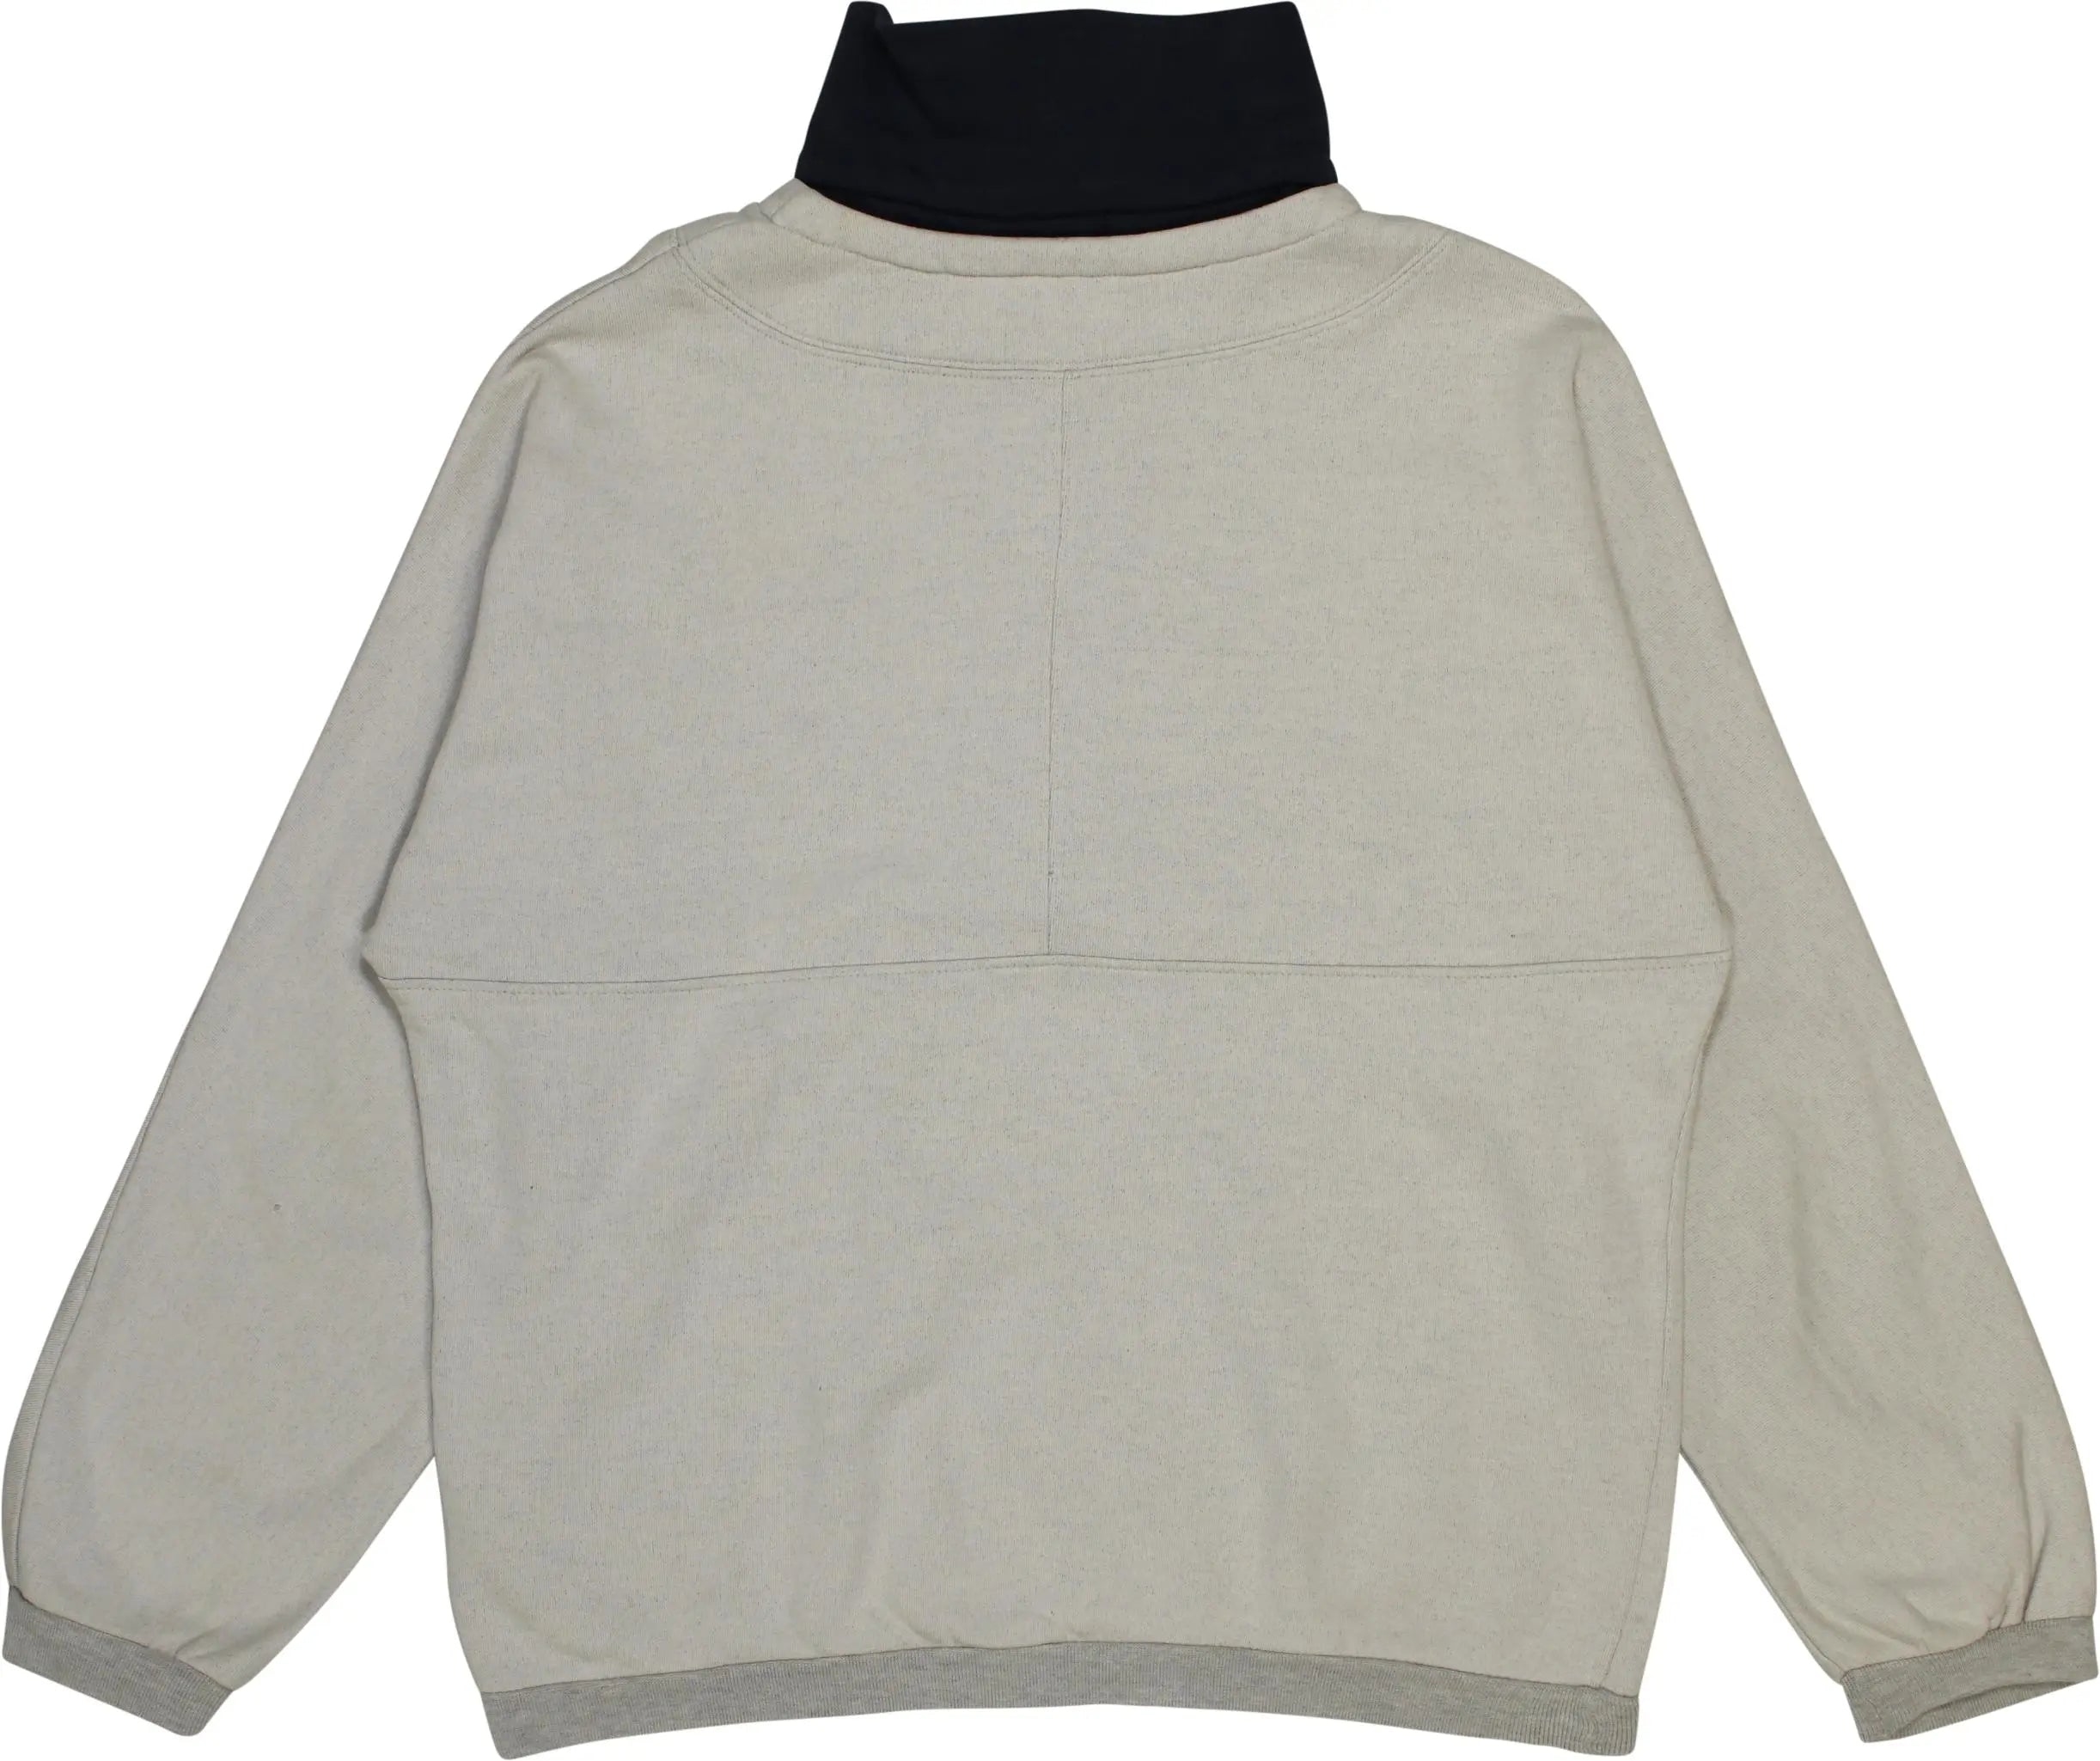 Lotto - Quarter Neck Zip Sweatshirt- ThriftTale.com - Vintage and second handclothing